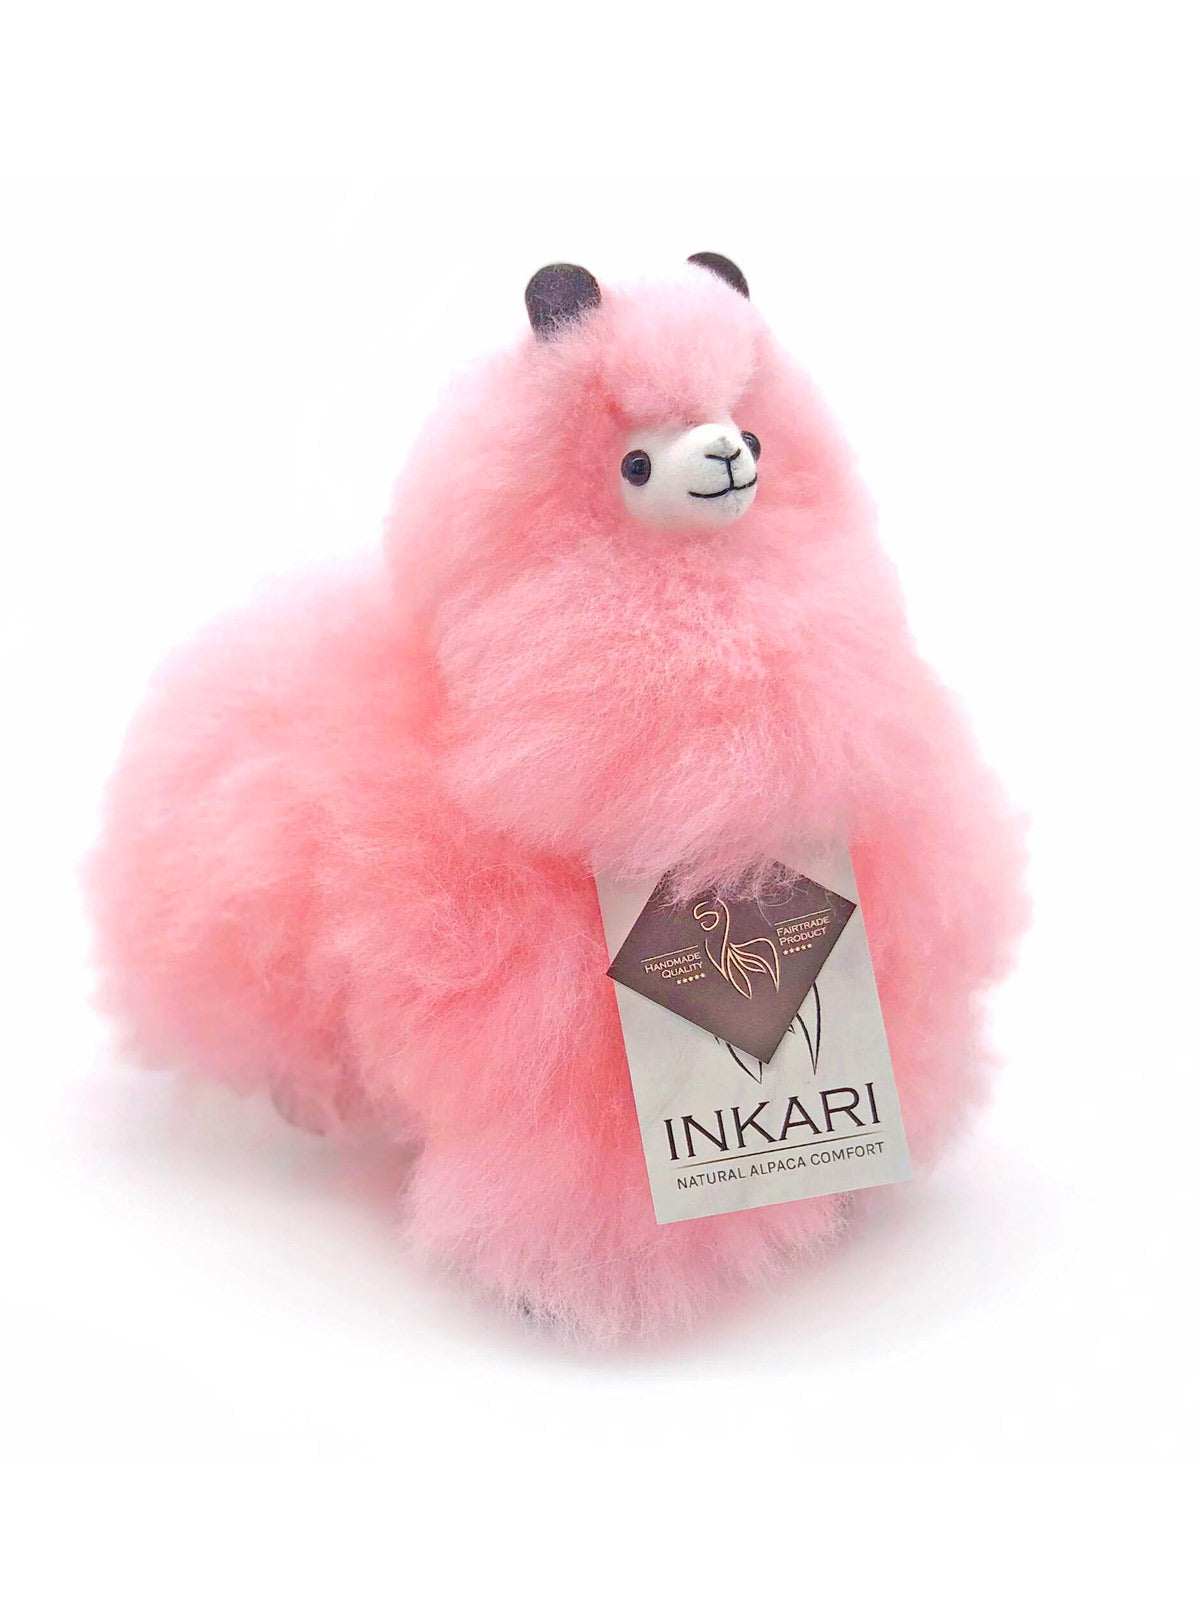 Inkari Alpaca soft toy-Rainbows-COTTON CANDY-Small 23cm